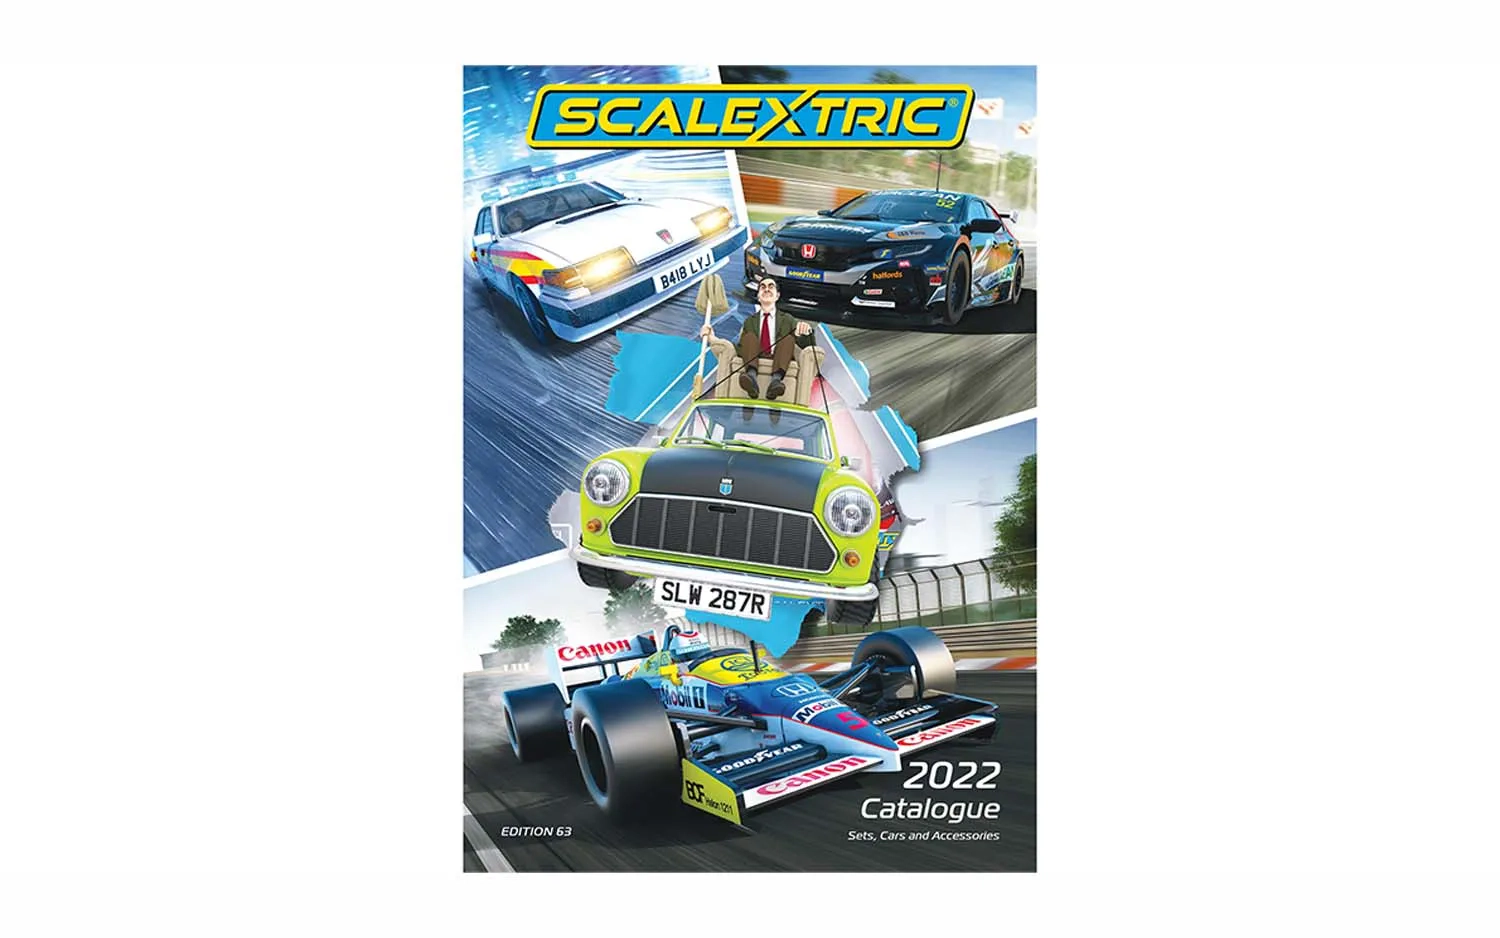 C8185 Scalextric 2020 Catalogue 